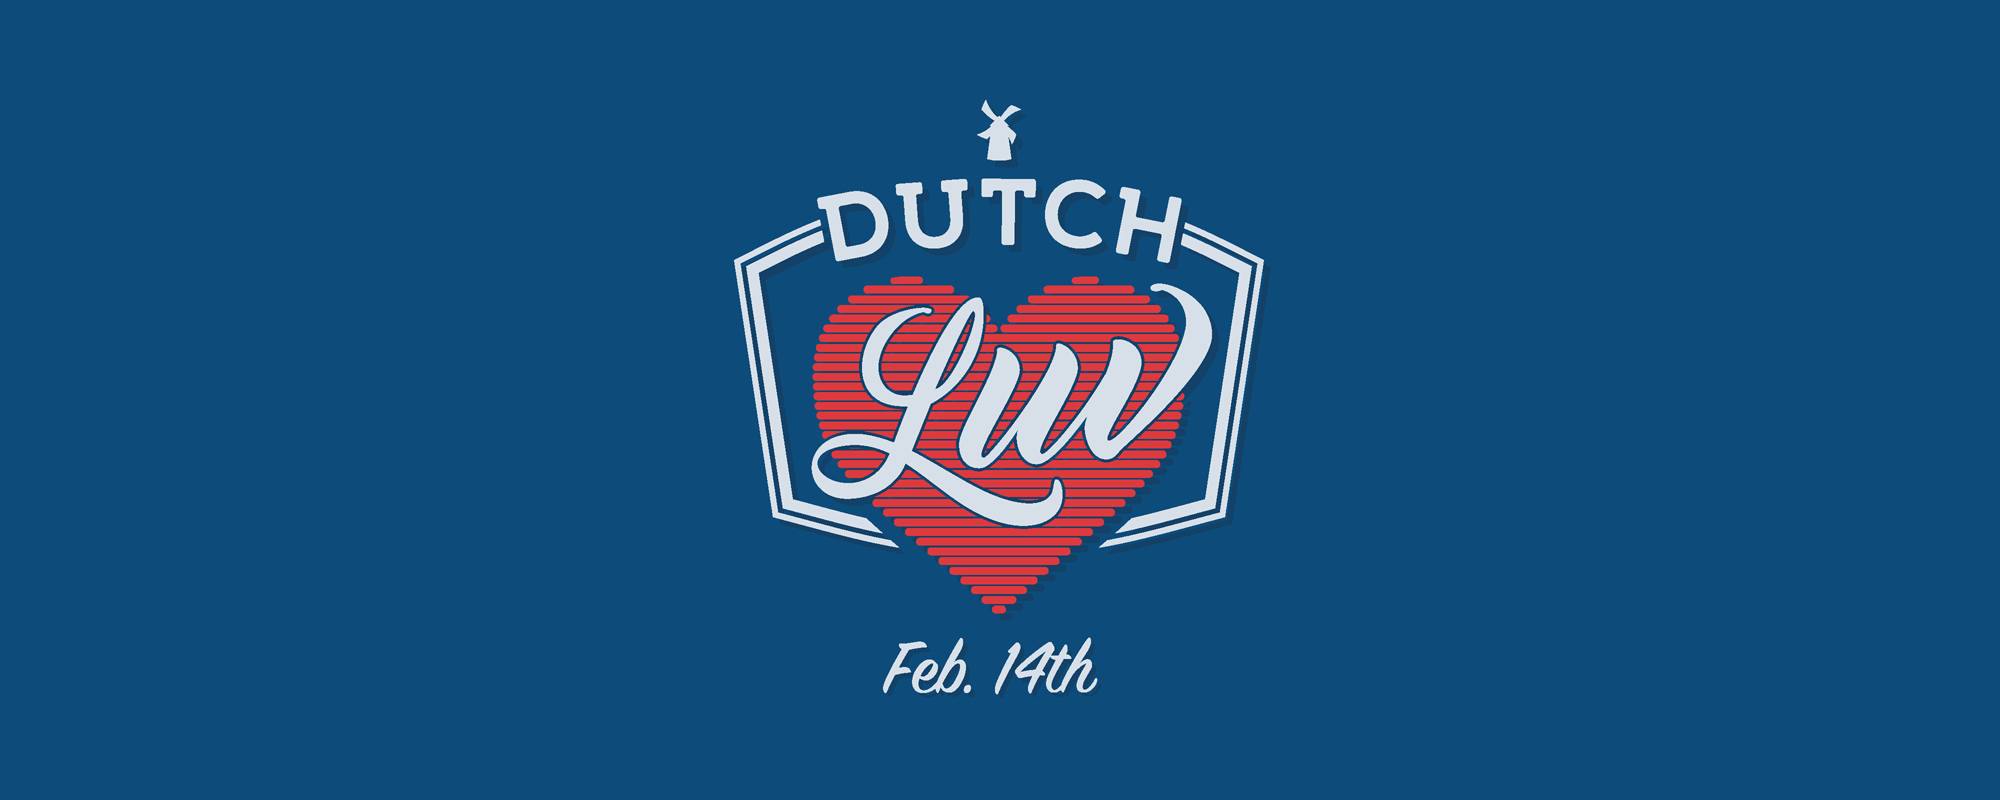 Dutch Luv Day Community Action Partnership